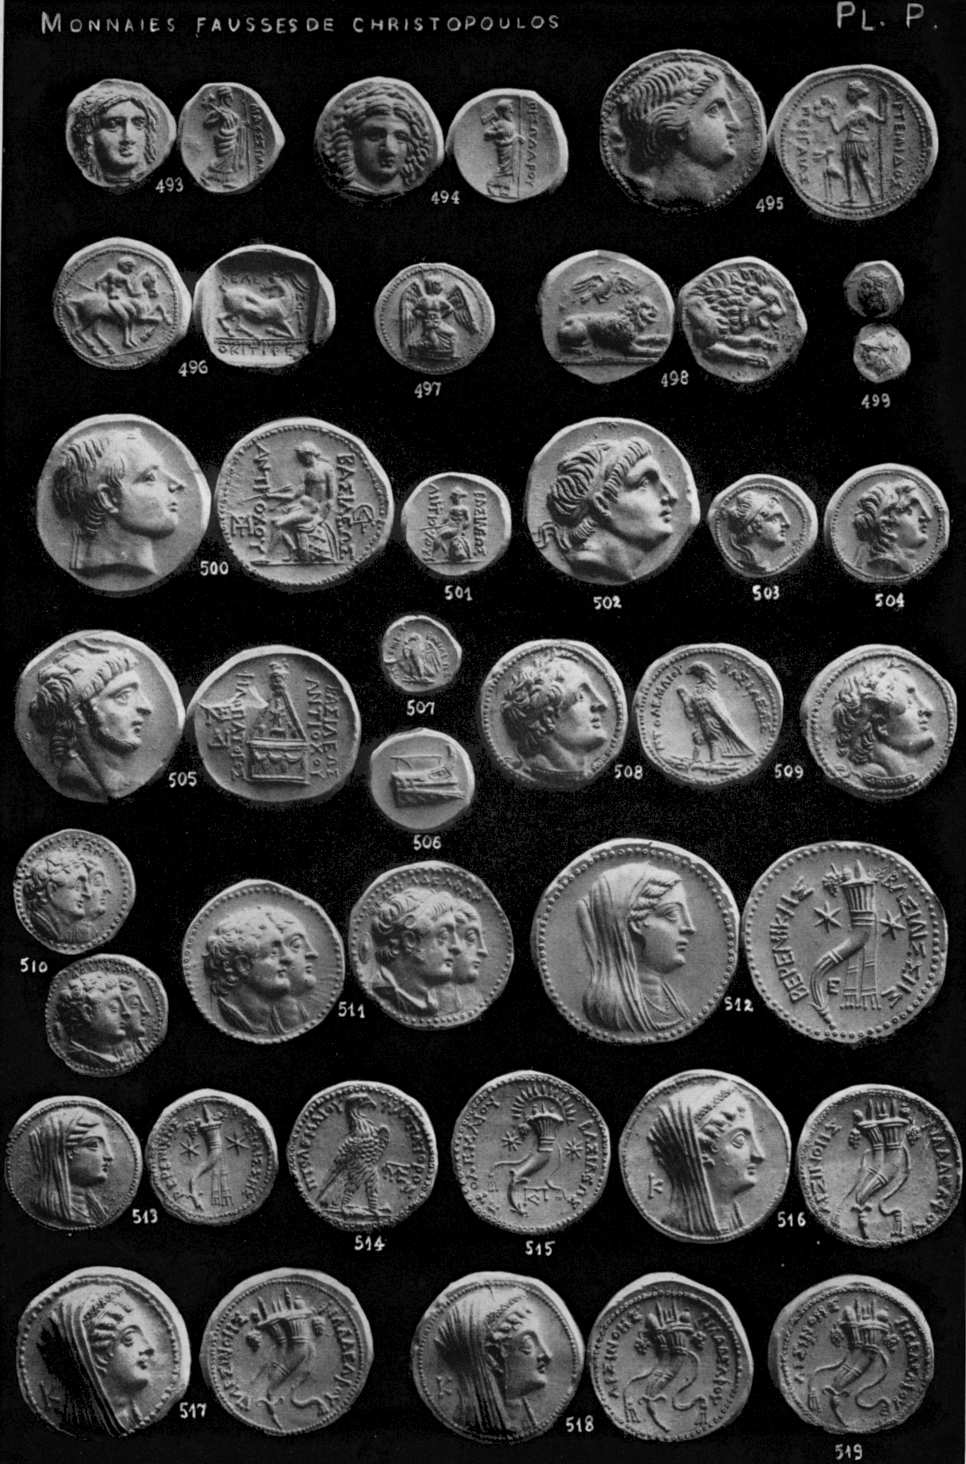 Plate P of false coins